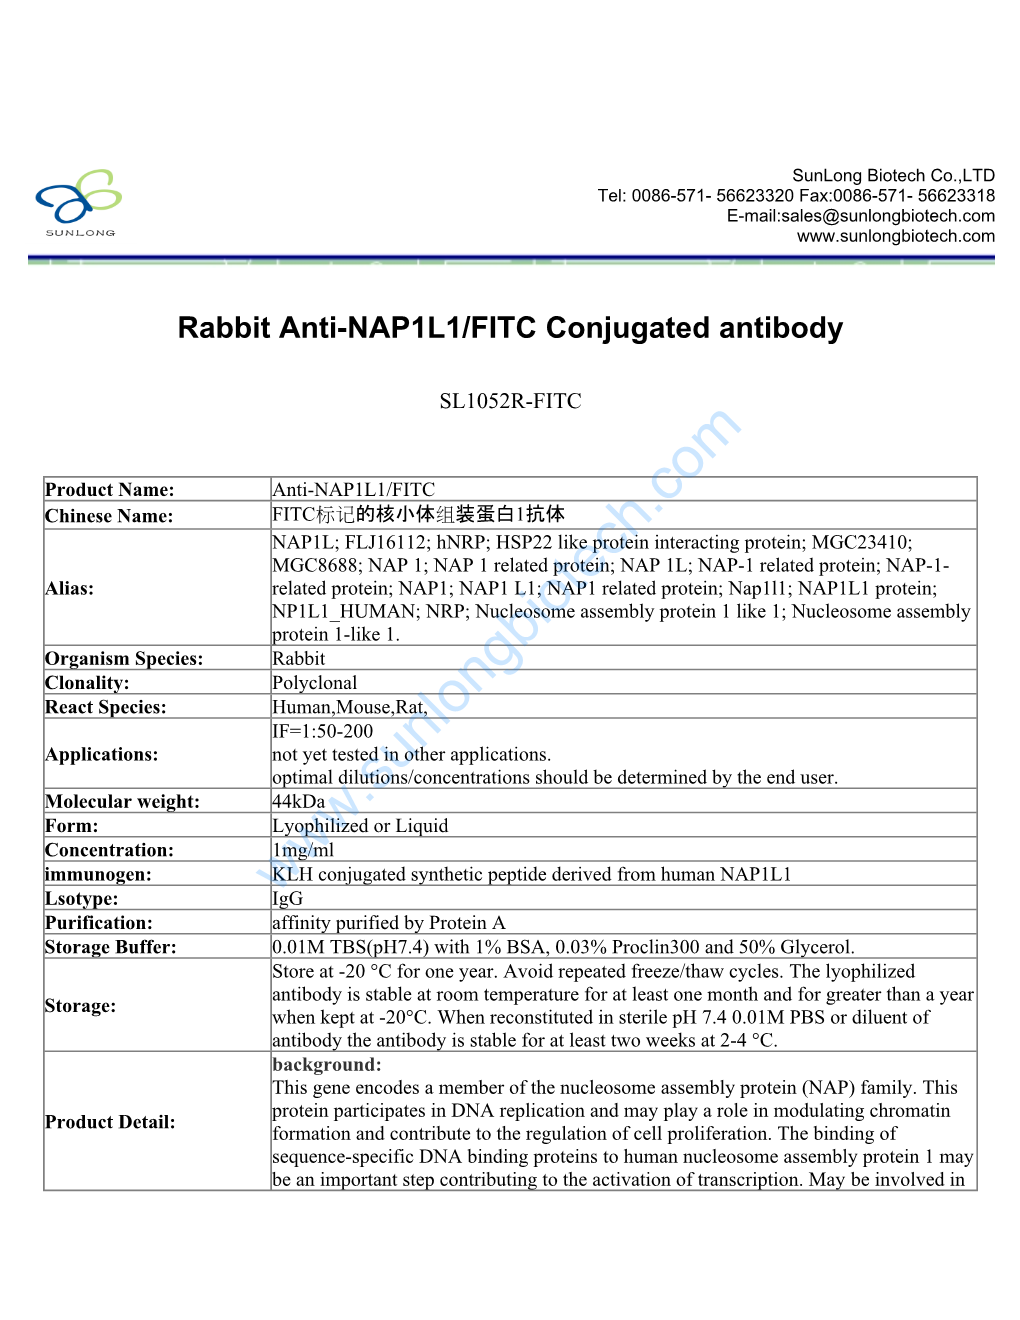 Rabbit Anti-NAP1L1/FITC Conjugated Antibody-SL1052R-FITC